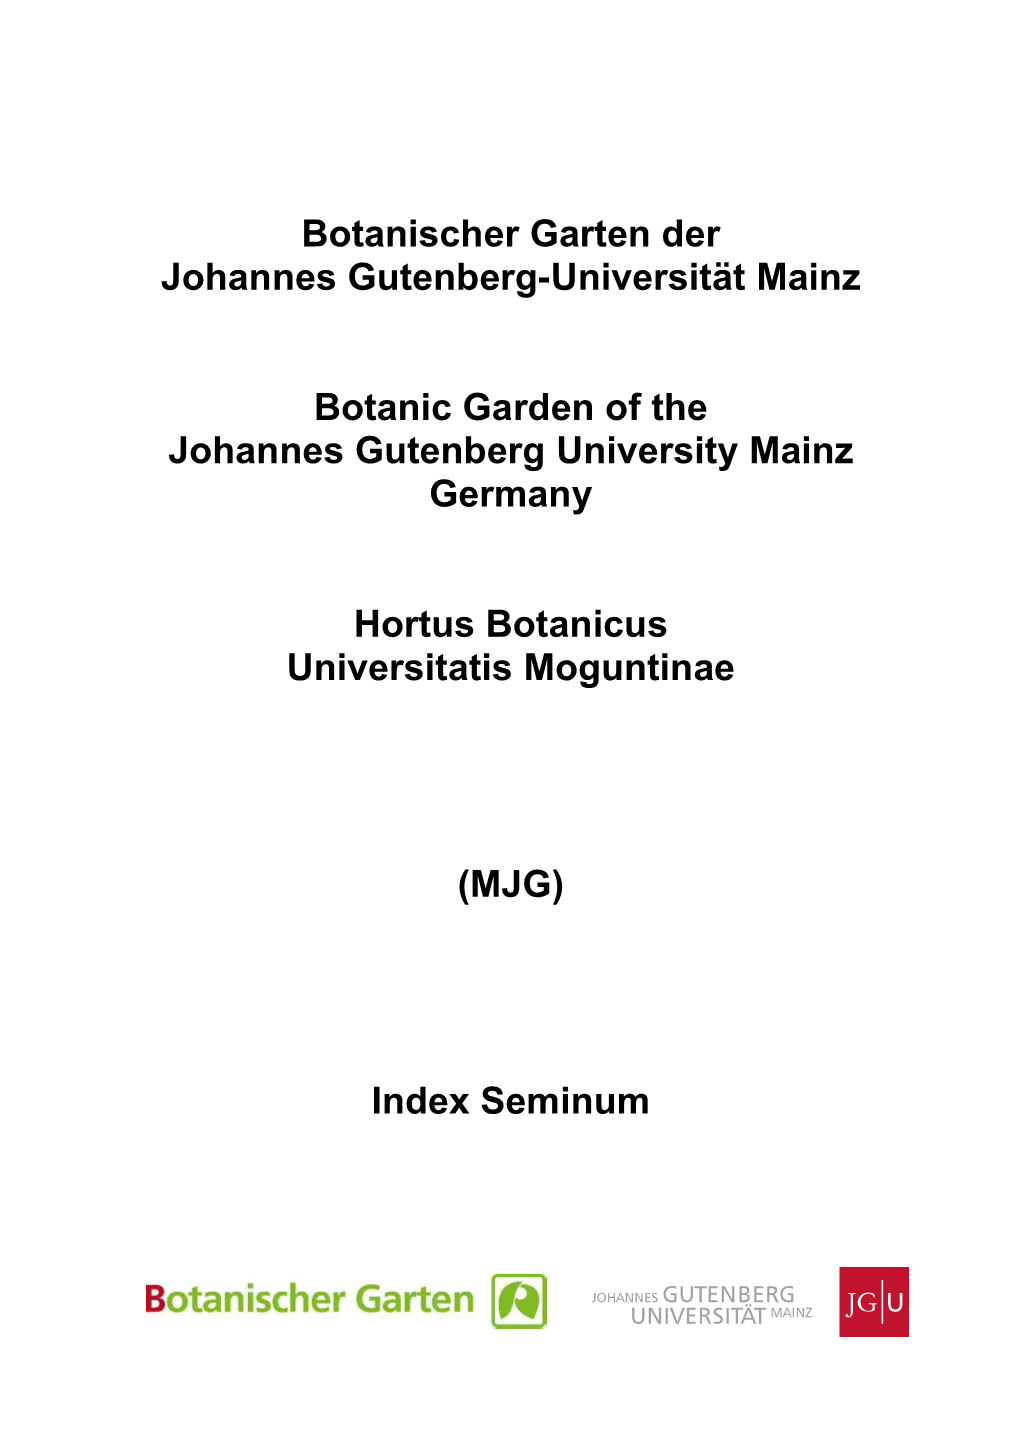 Seminum 2019 MJG Botanischer Garten Johannes Gutenberg